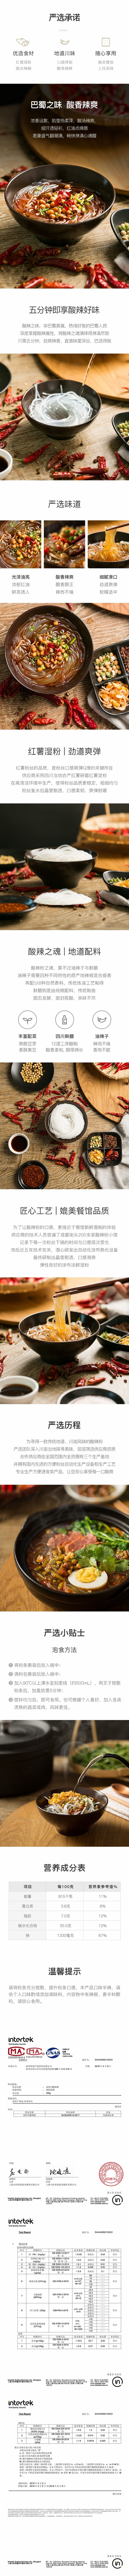 YANXUAN Sichuan Hot and Sour Rice Noodles